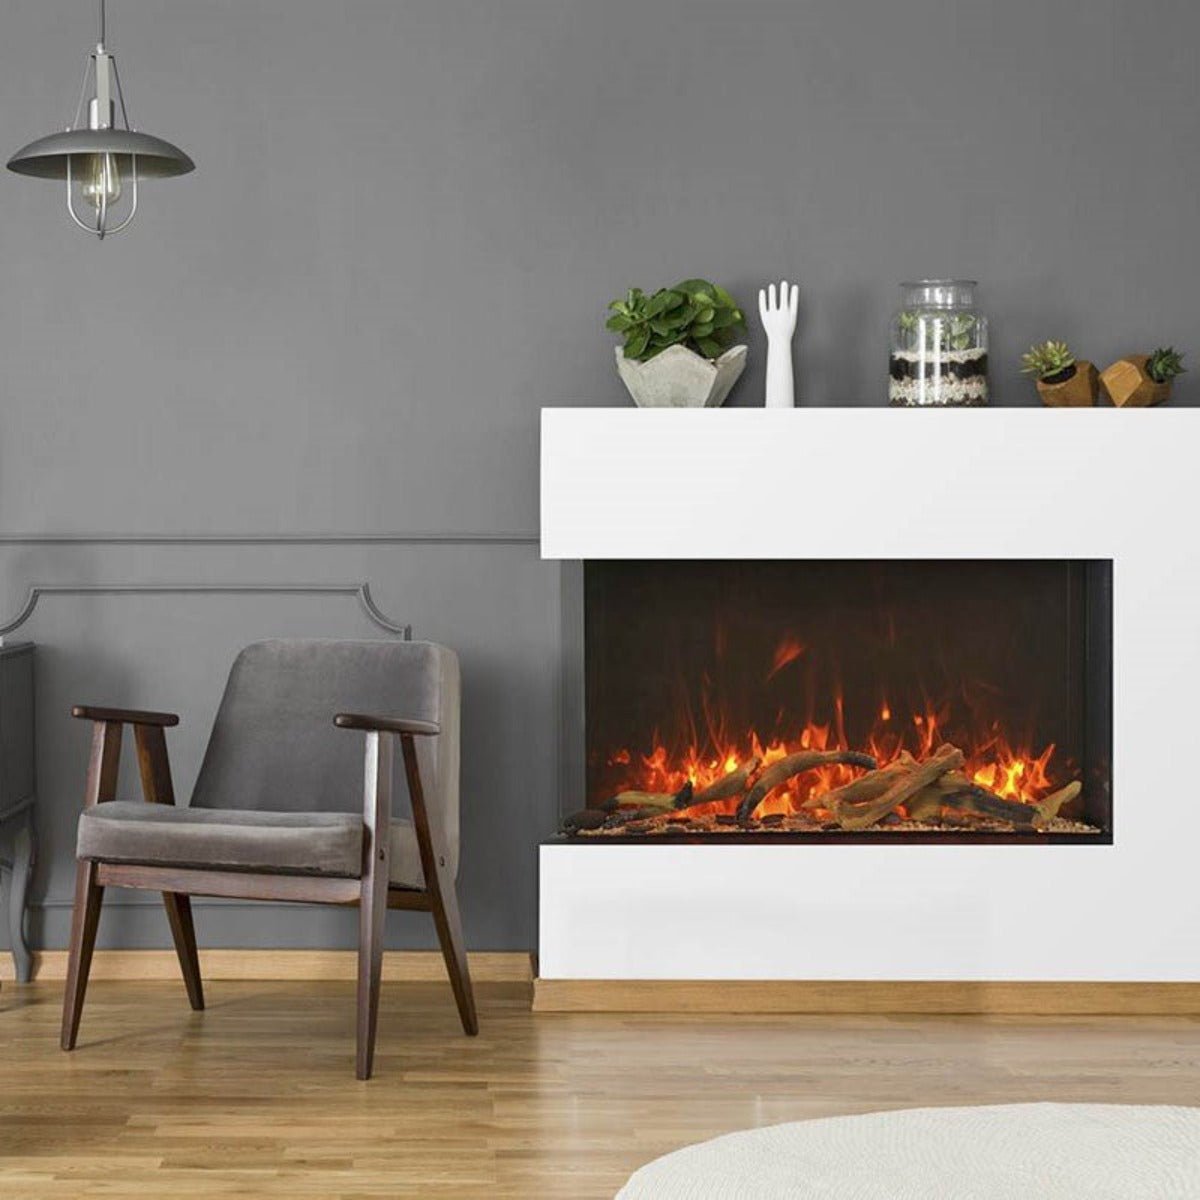 Amantii 40 TRU VIEW XL XT – 3 Sided Electric Fireplace - 101cm - Outdoorium